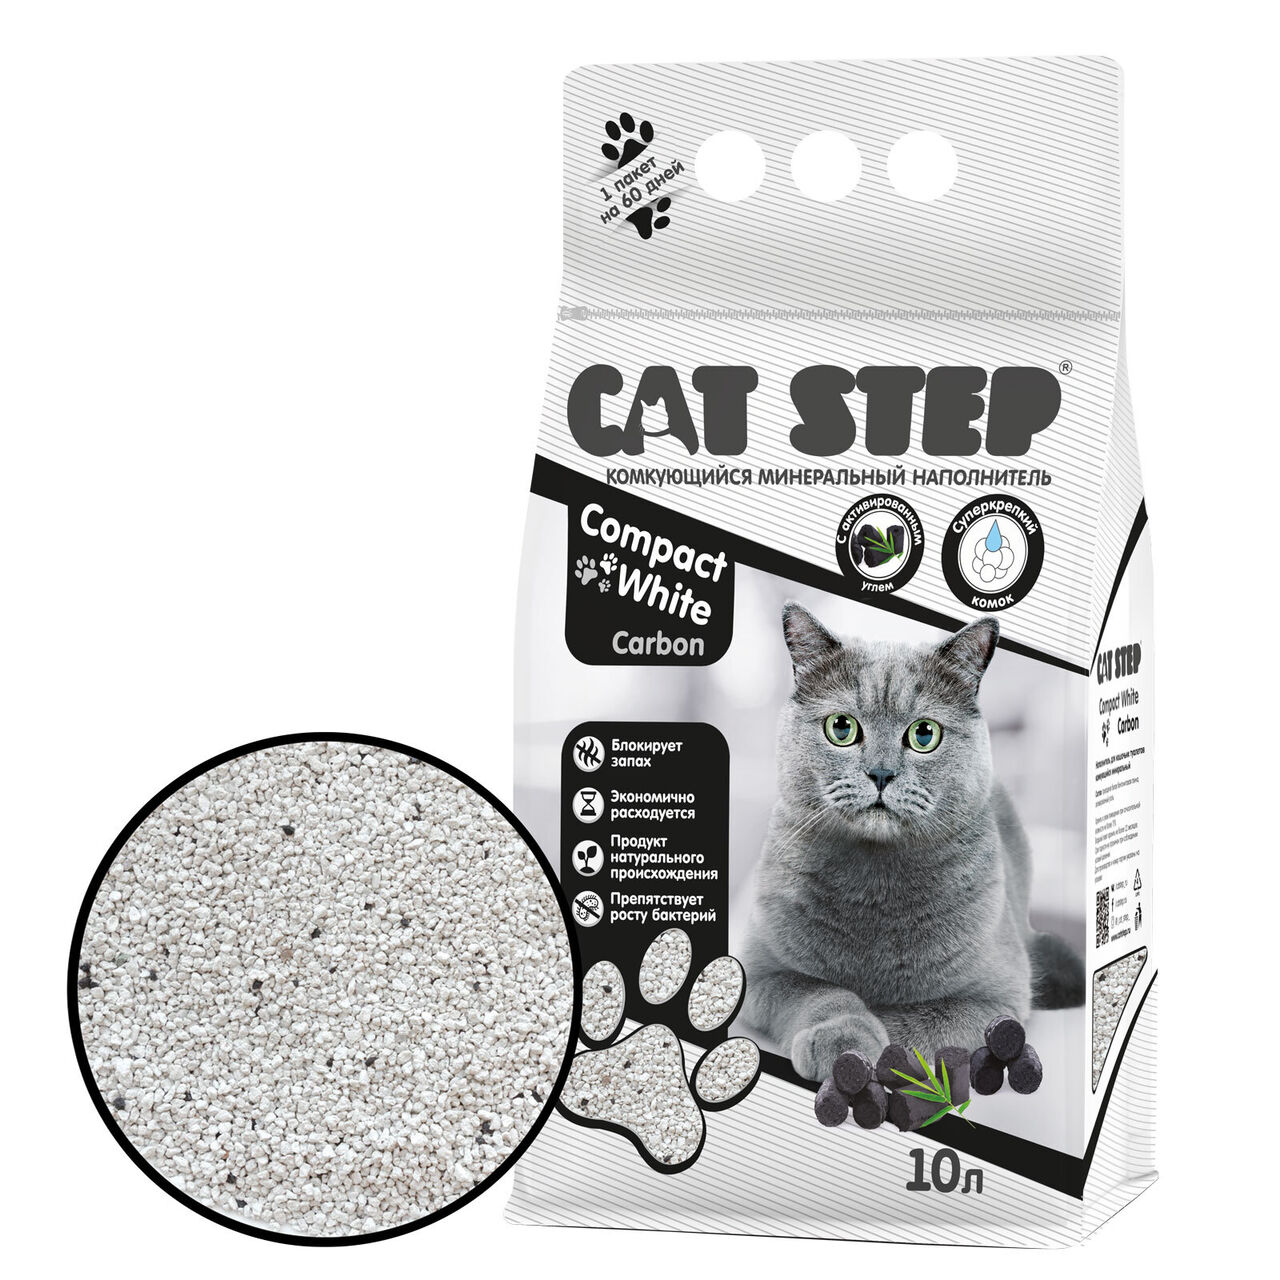 Наполнитель Cat Step Compact White Carbon, комкующийся, 10 л